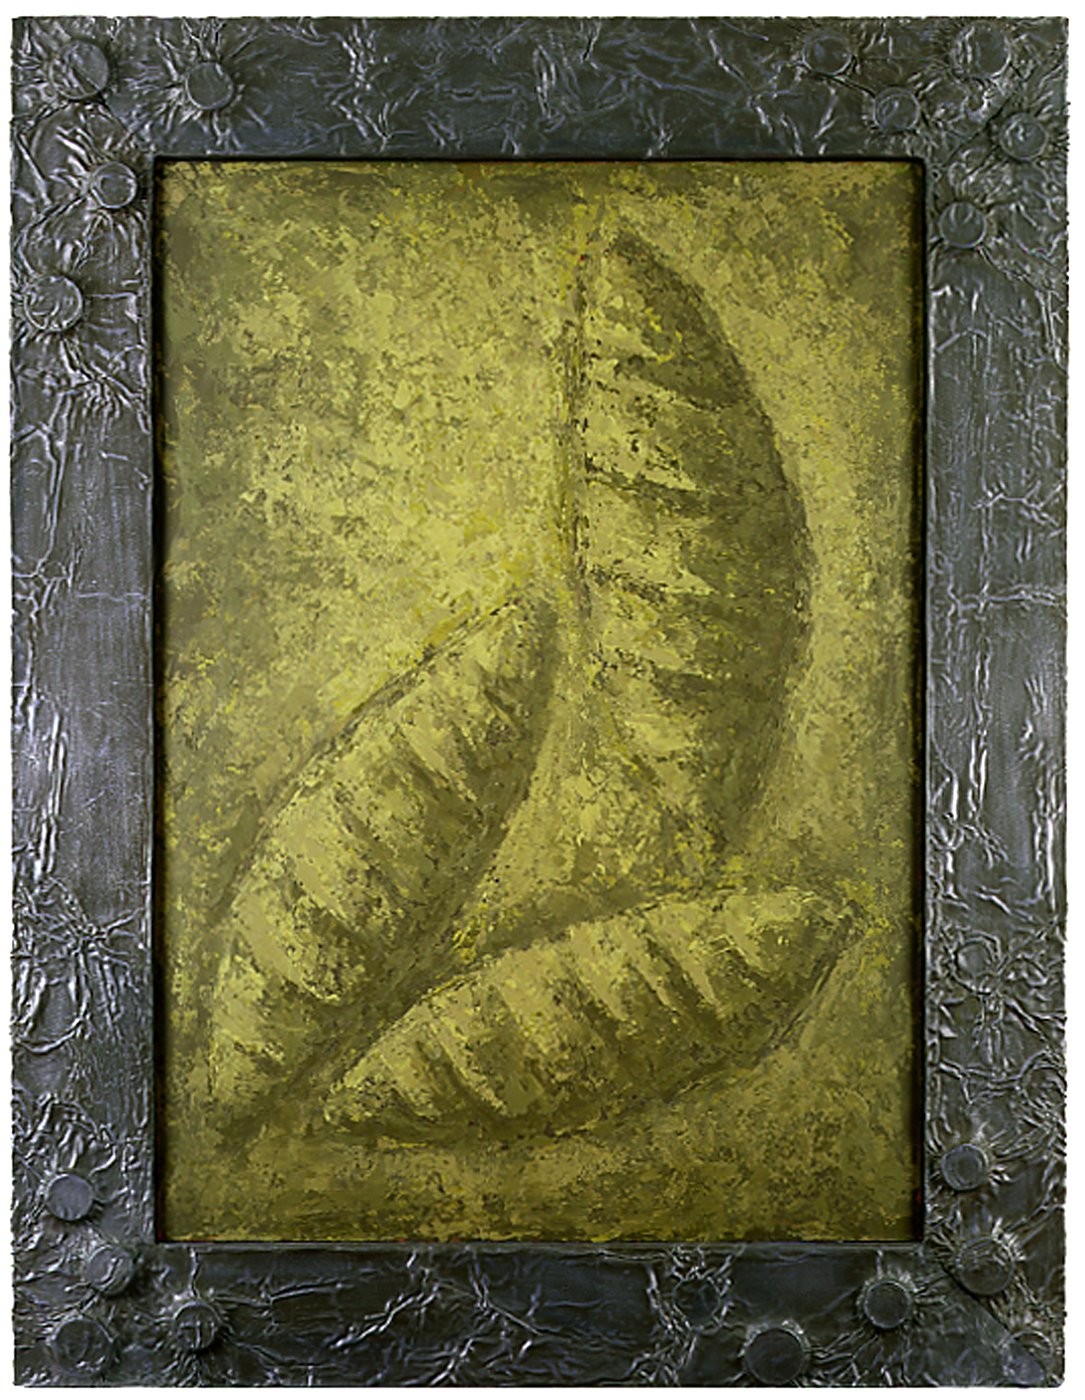  Tres Capullos, 1989    Óleo, lienzo   180 x 160 cm. 